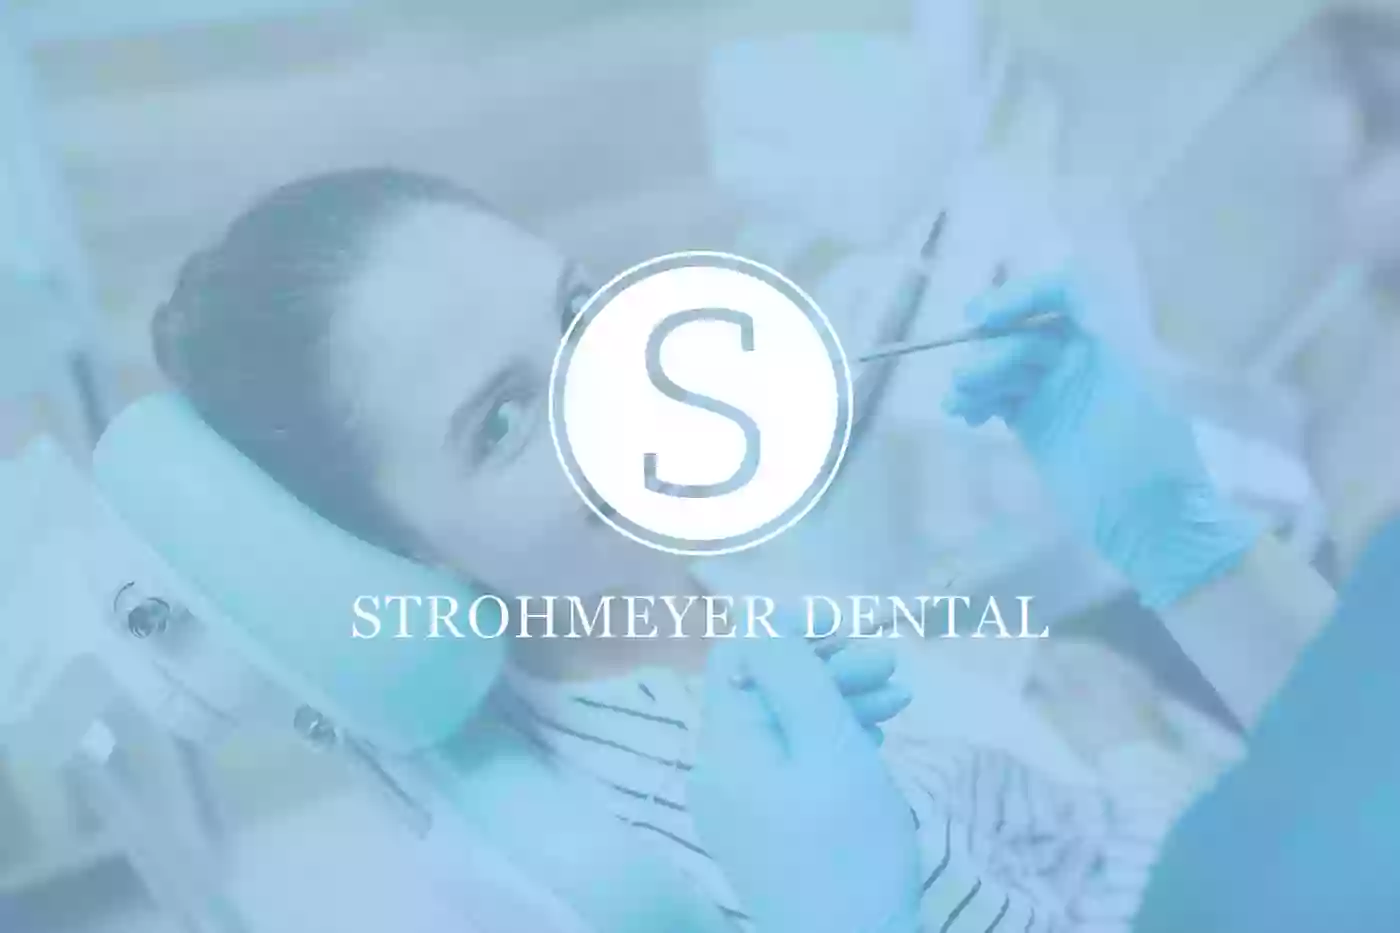 Strohmeyer Dental